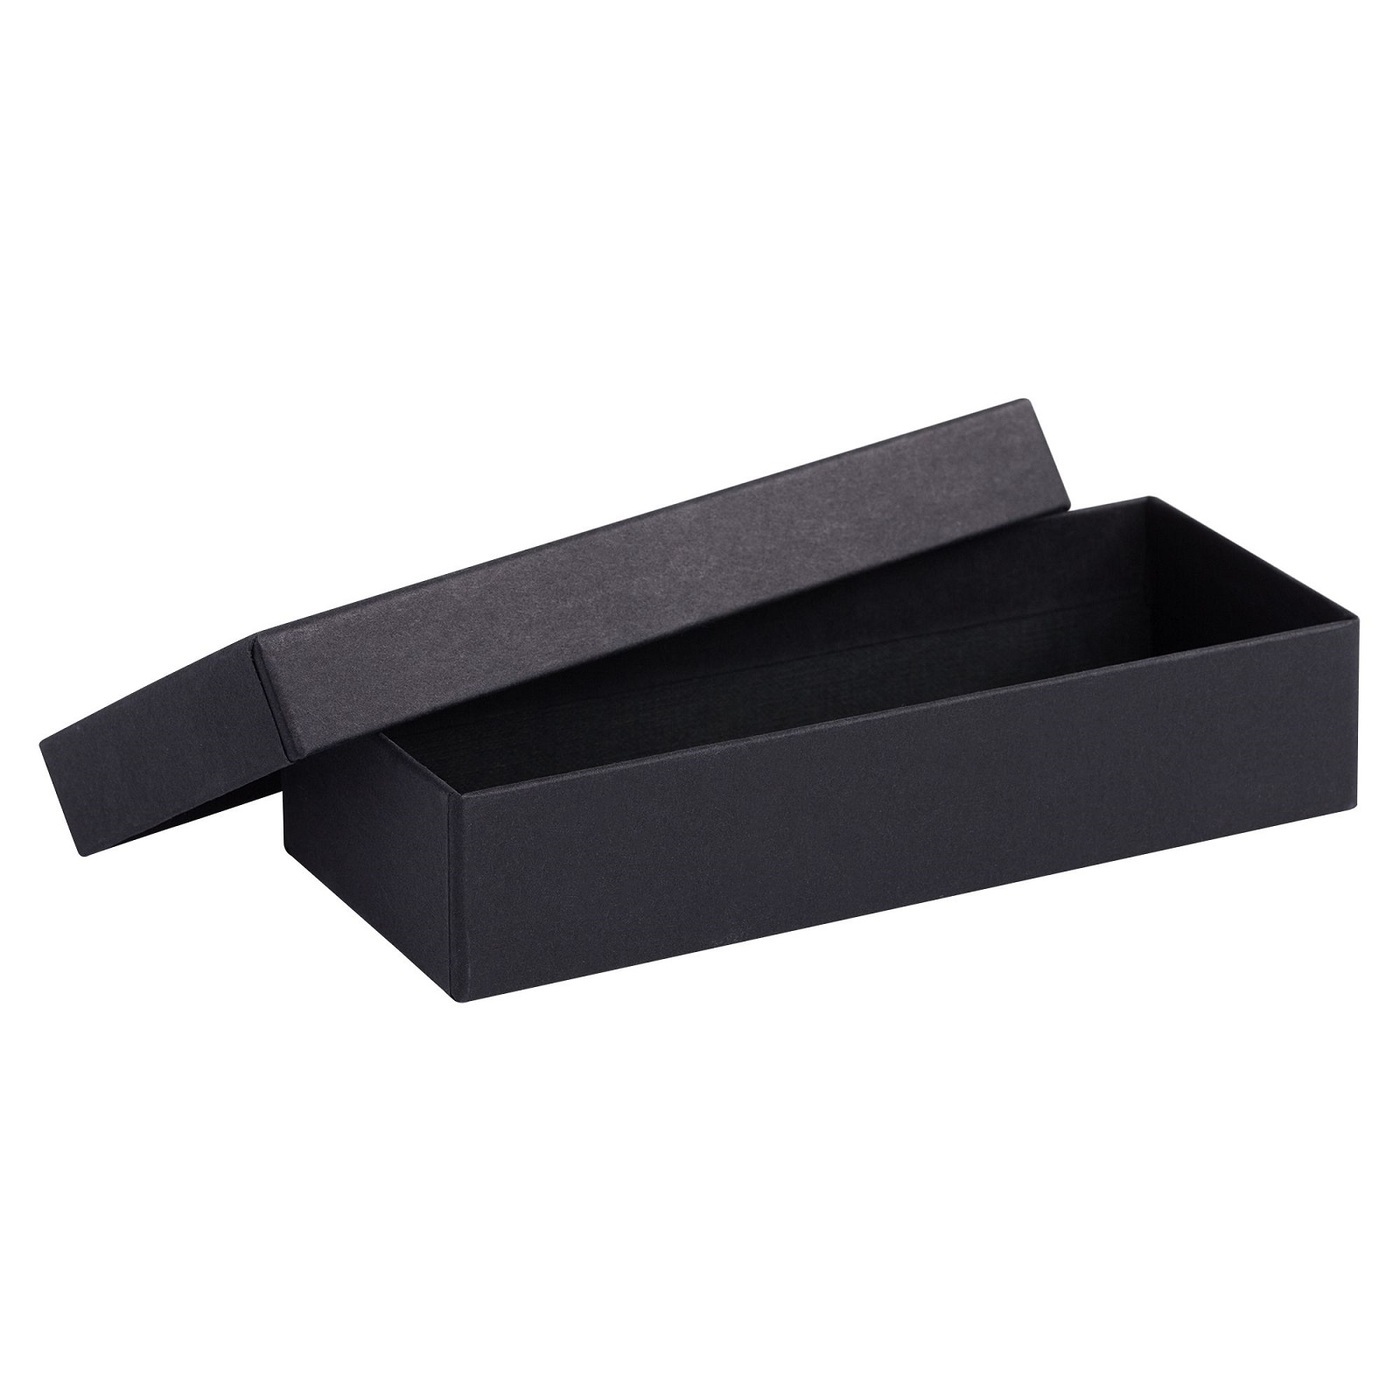 Коробки мини купить. Иксрос 3 коробка черный. Коробка черная 300х200х70. Коробка черная прямоугольная. Подарочная коробка черная.